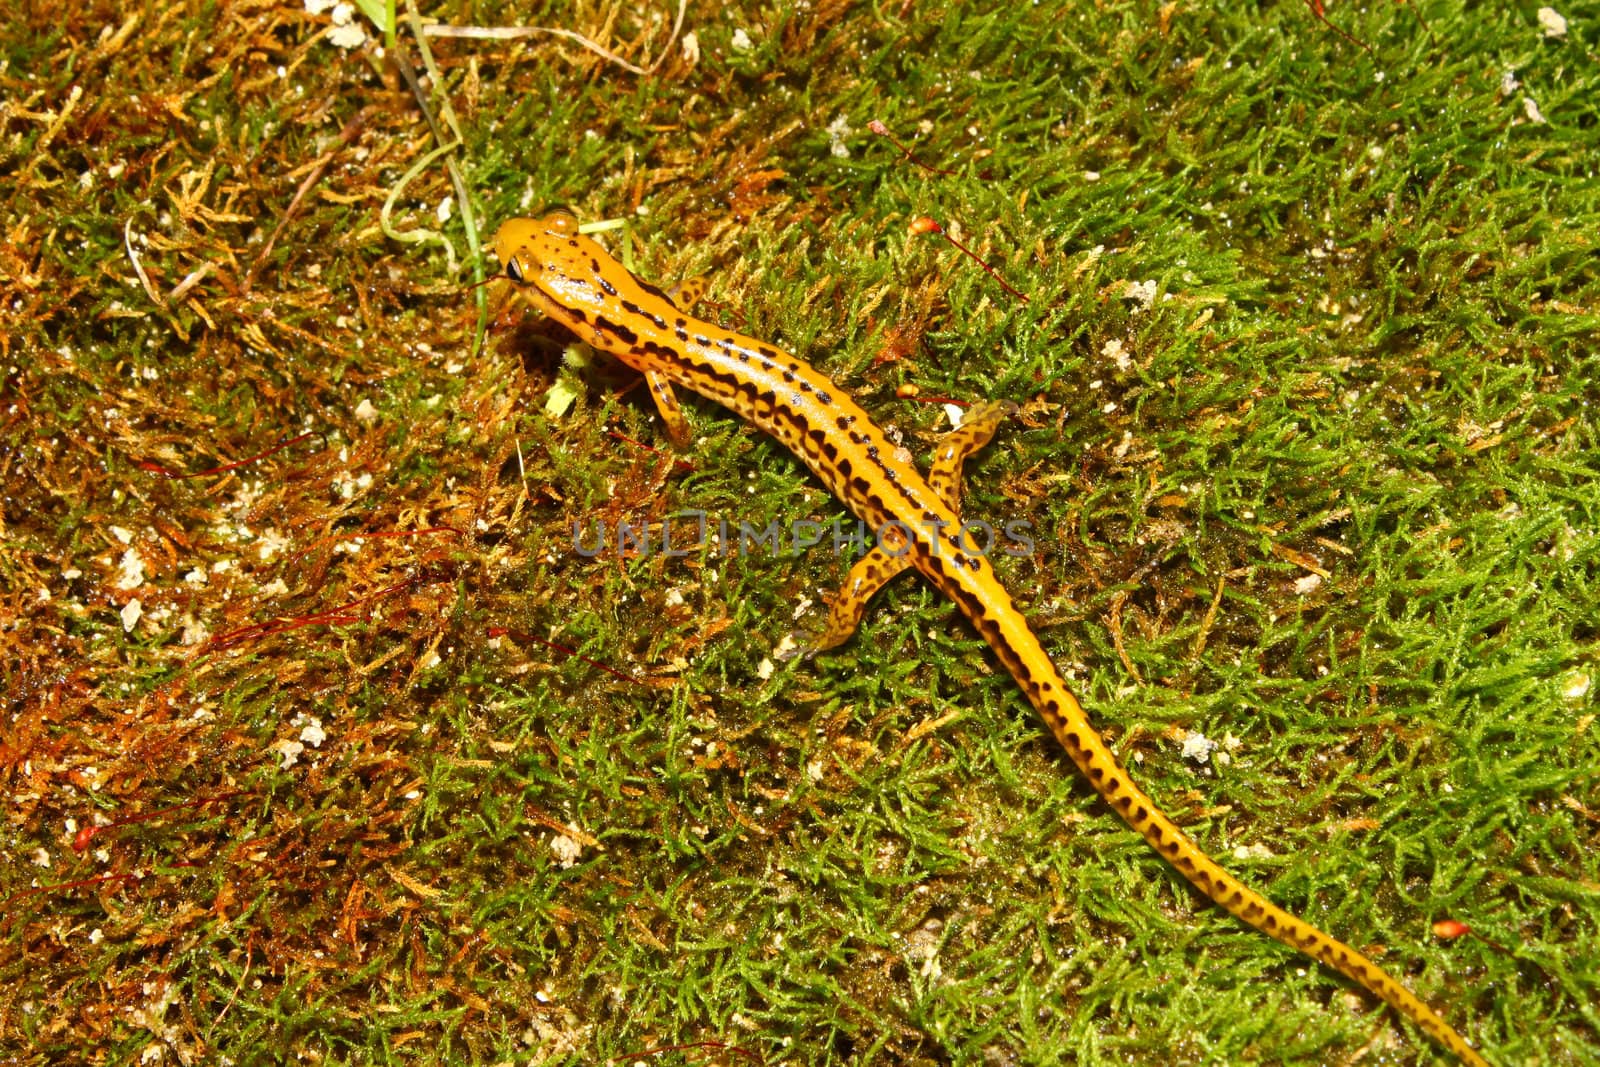 Long-tailed Salamander (Eurycea longicauda) by Wirepec